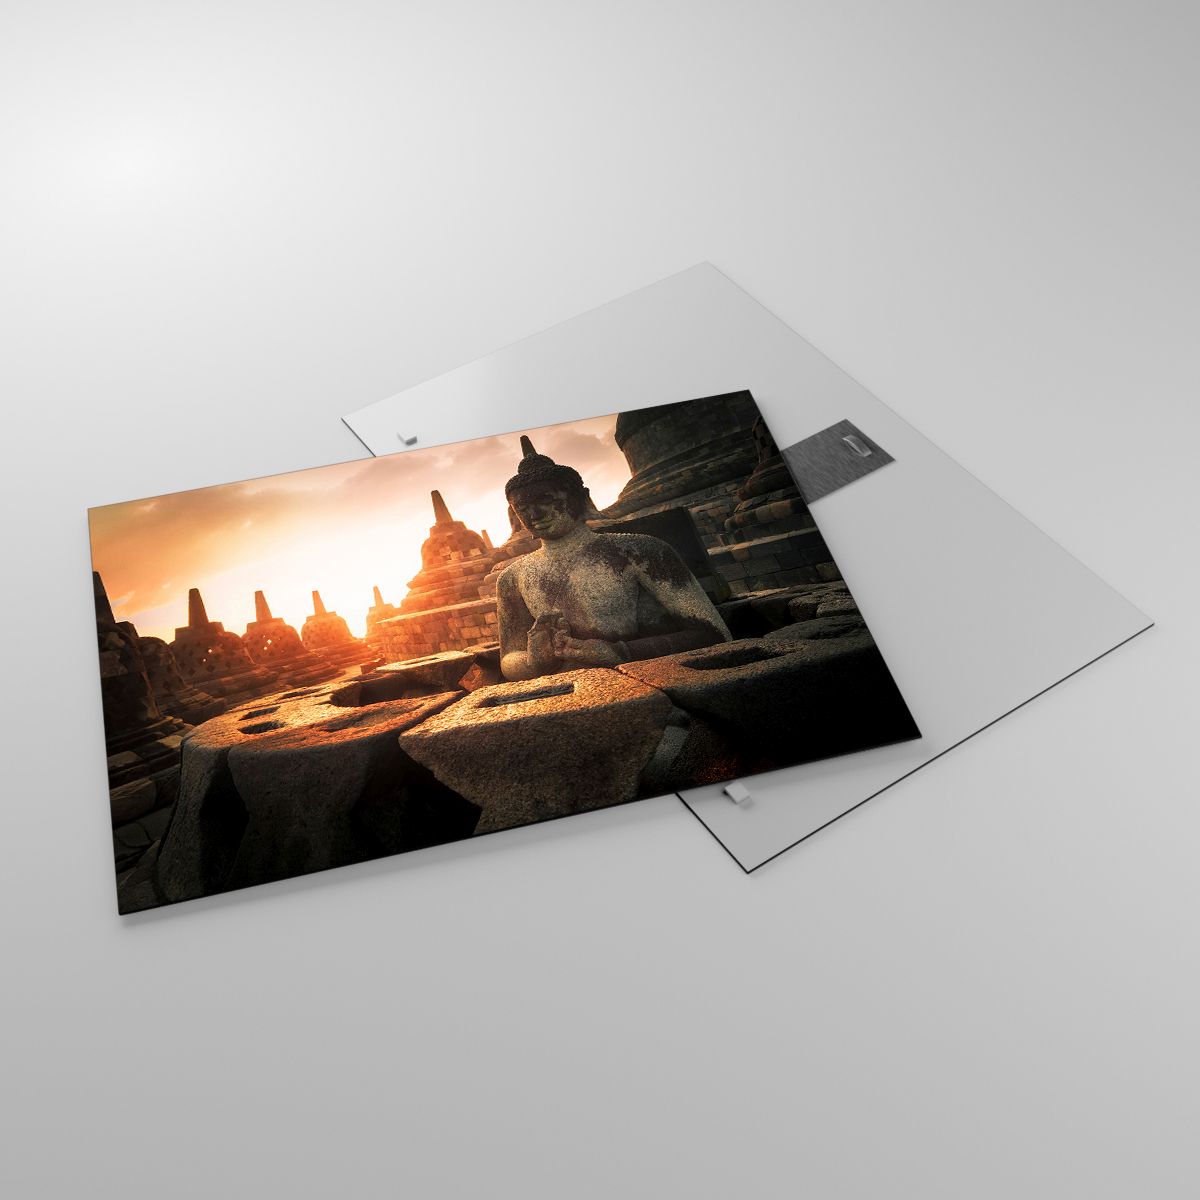 Glasbild Asien, Glasbild Buddha, Glasbild Borobudur, Glasbild Kultur, Glasbild Meditation